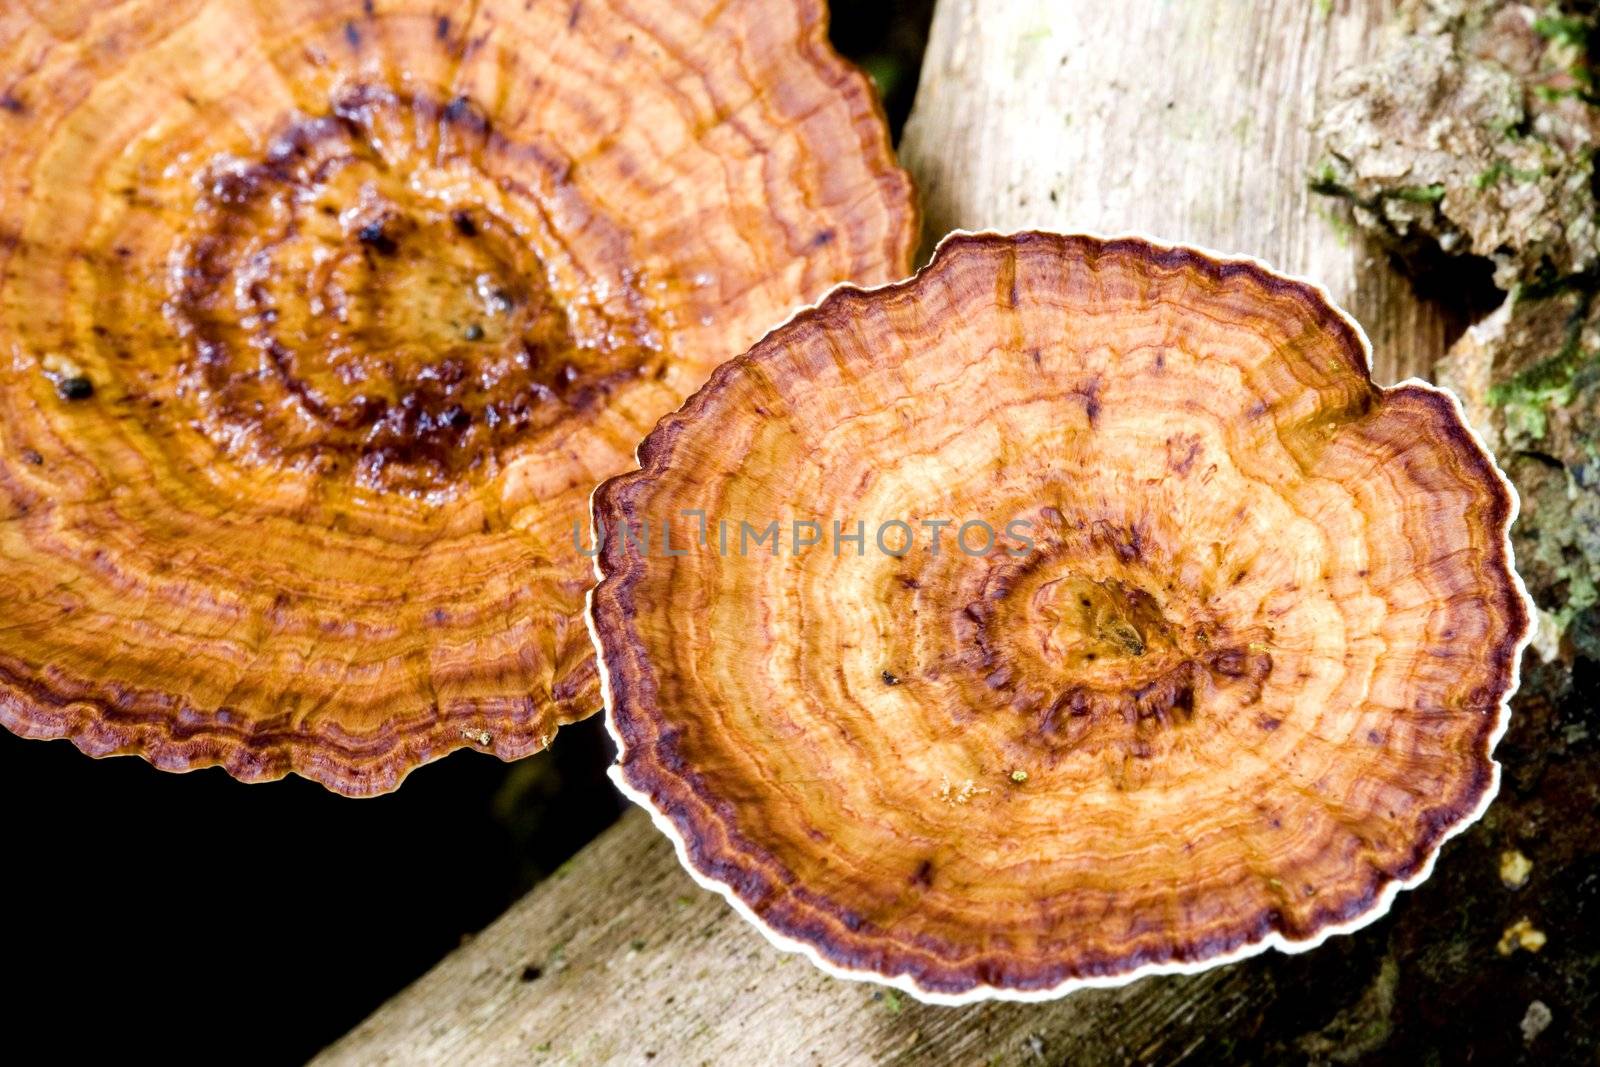 Tropical Wild Mushrooms by shariffc